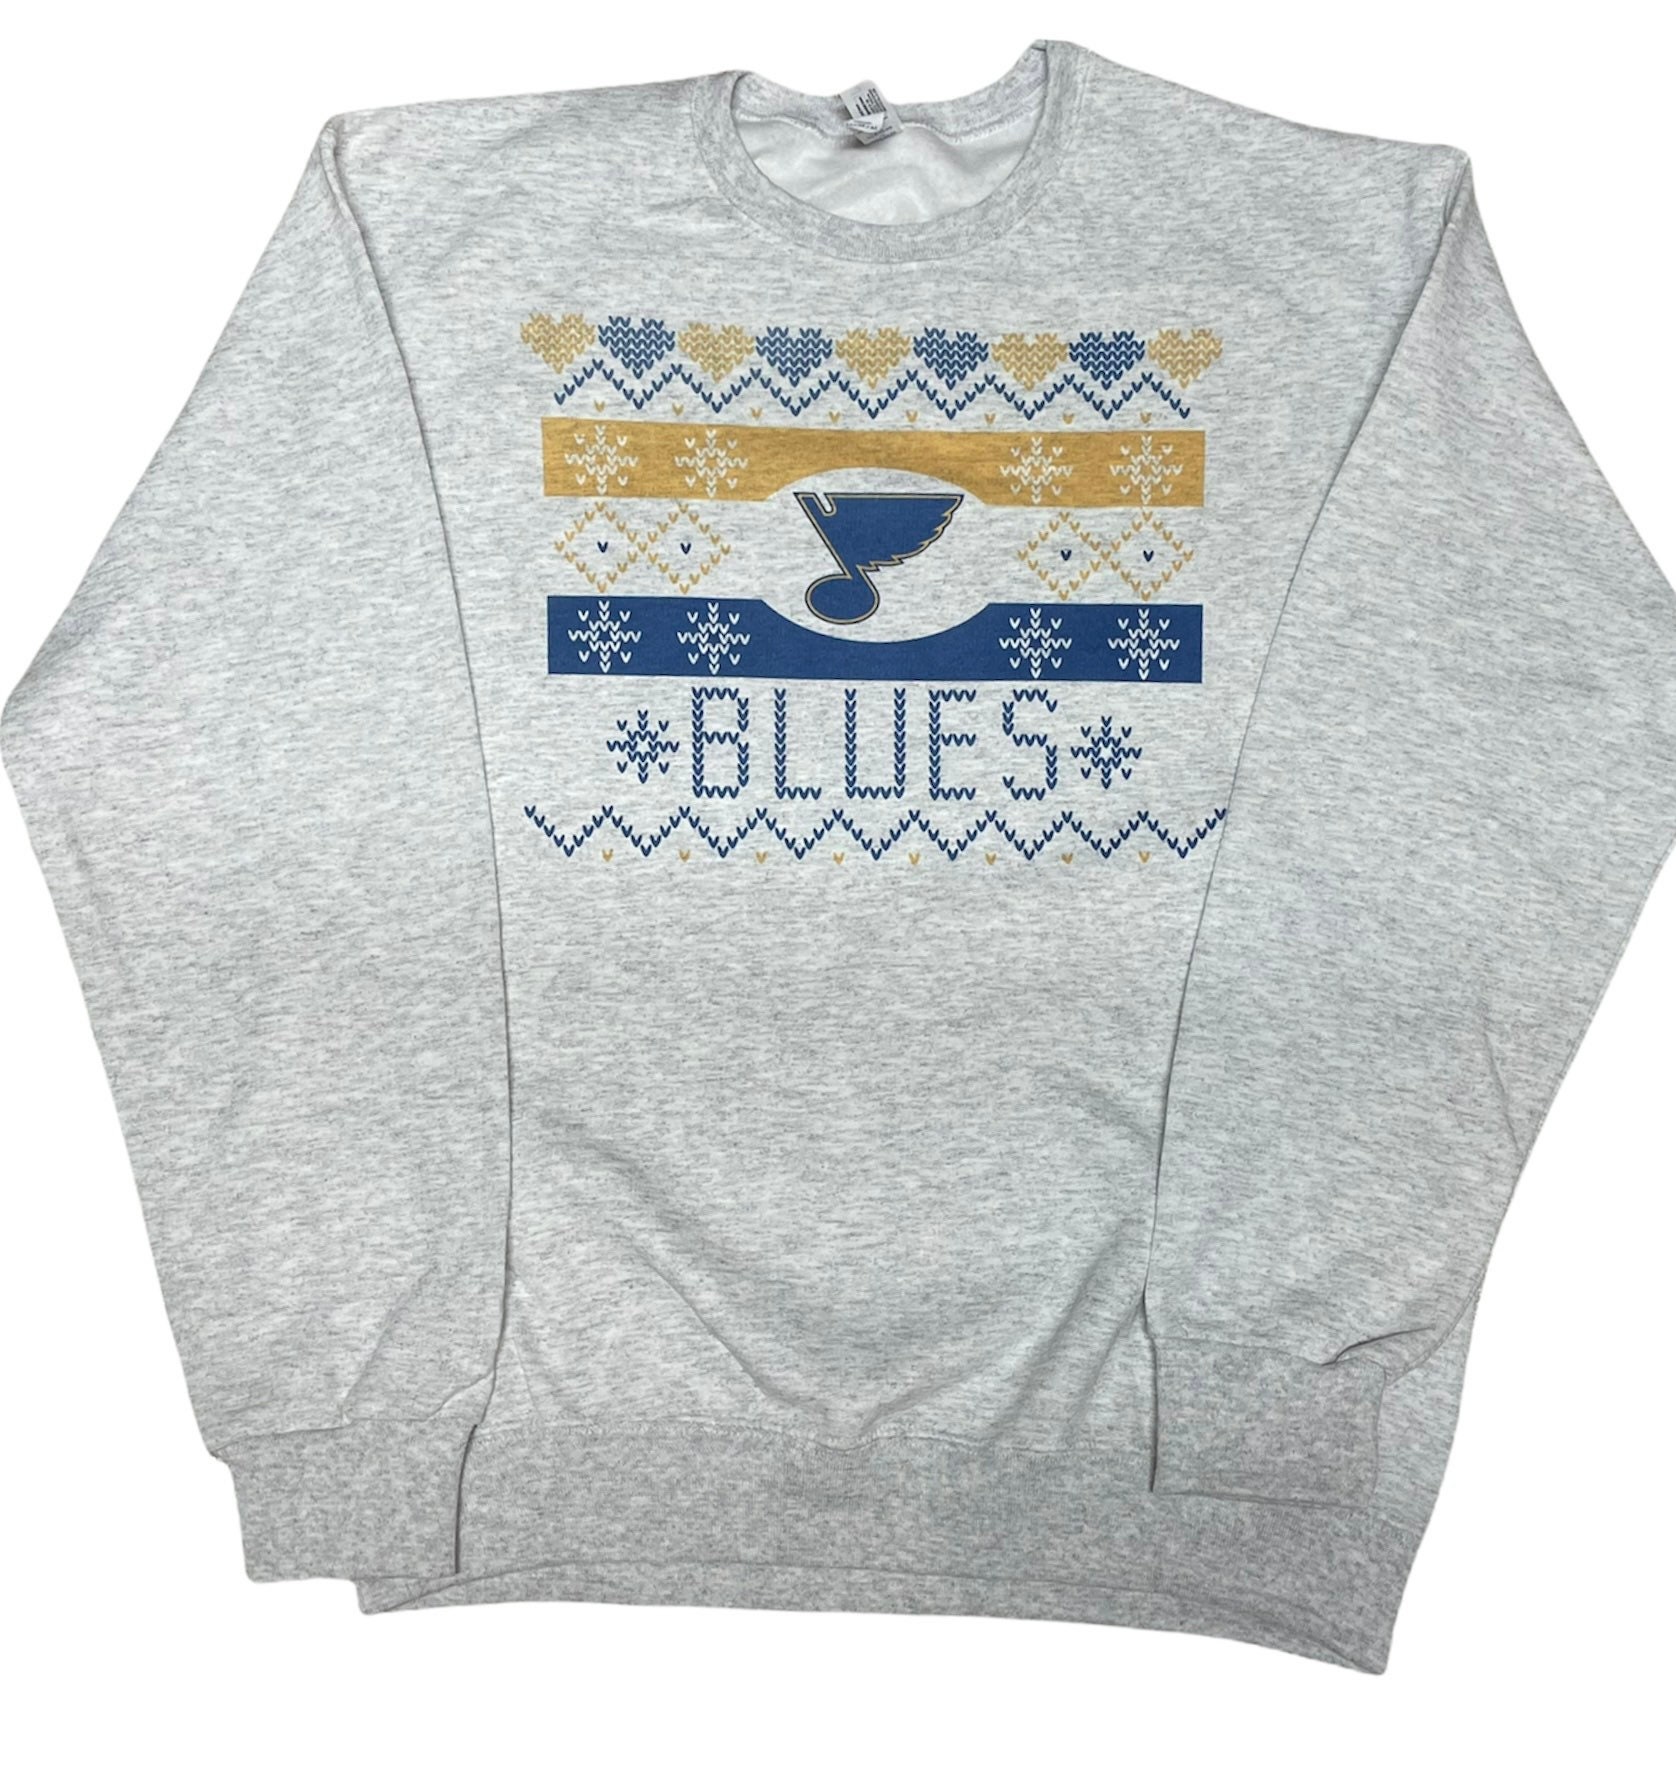 St Louis Blues Block Party Crew Sweatshirt - Grey